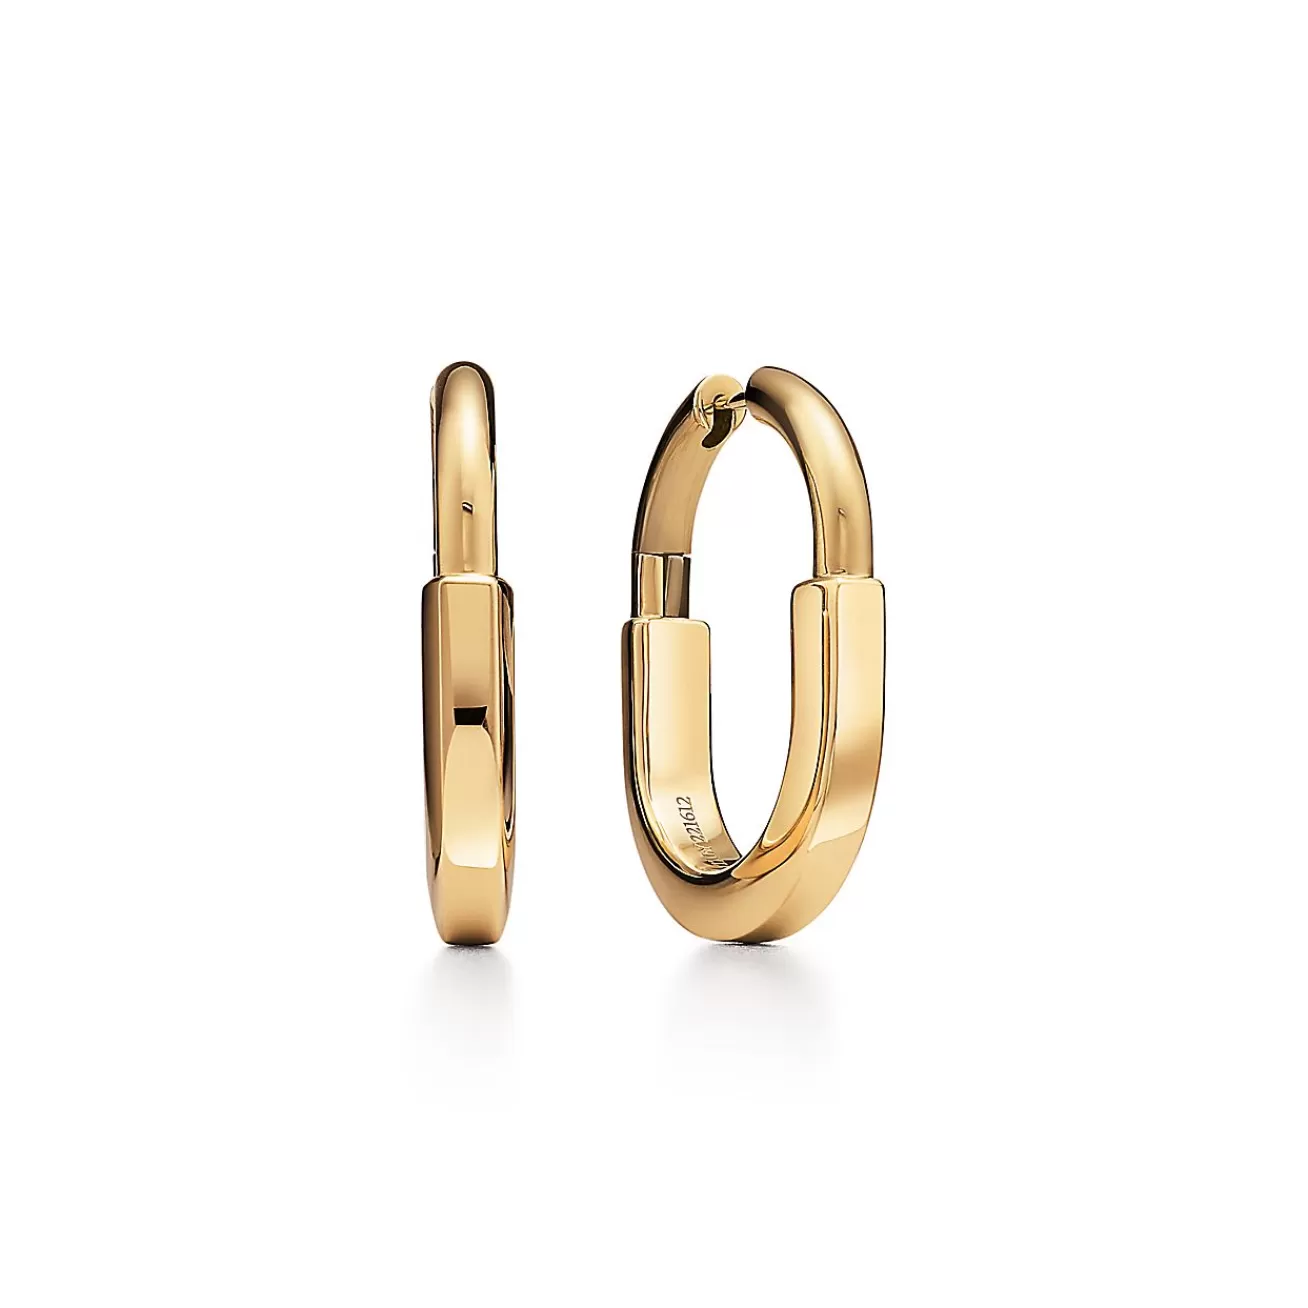 Tiffany & Co. Tiffany Lock Earrings in Yellow Gold, Medium | ^ Earrings | Gifts for Her